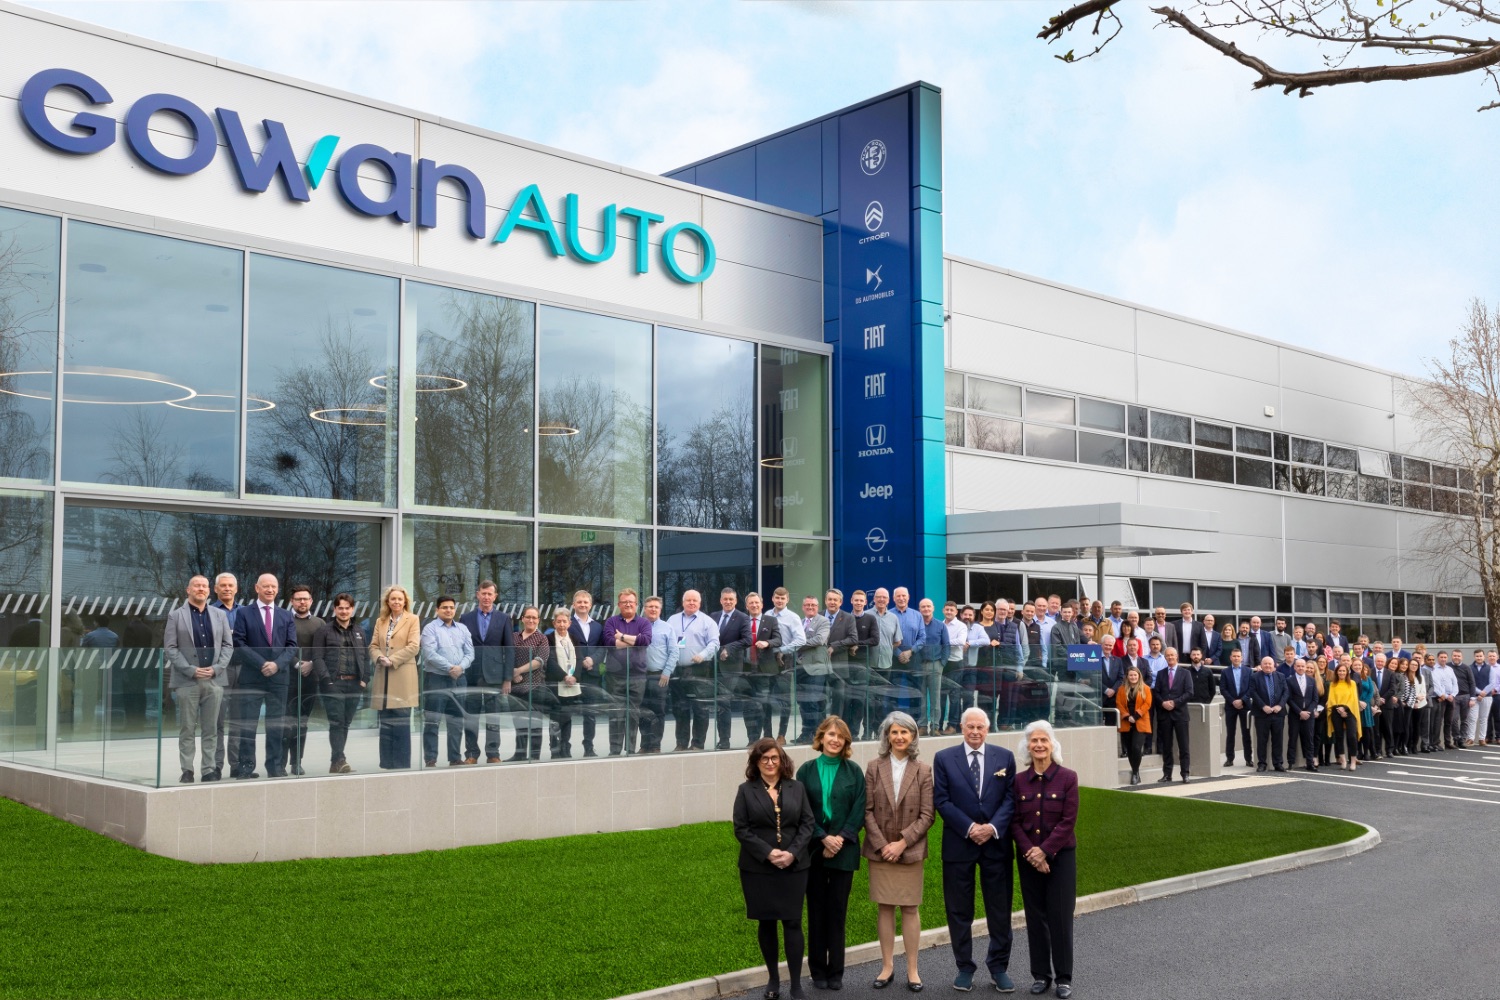 Gowan Auto inaugurates new HQ in Dublin